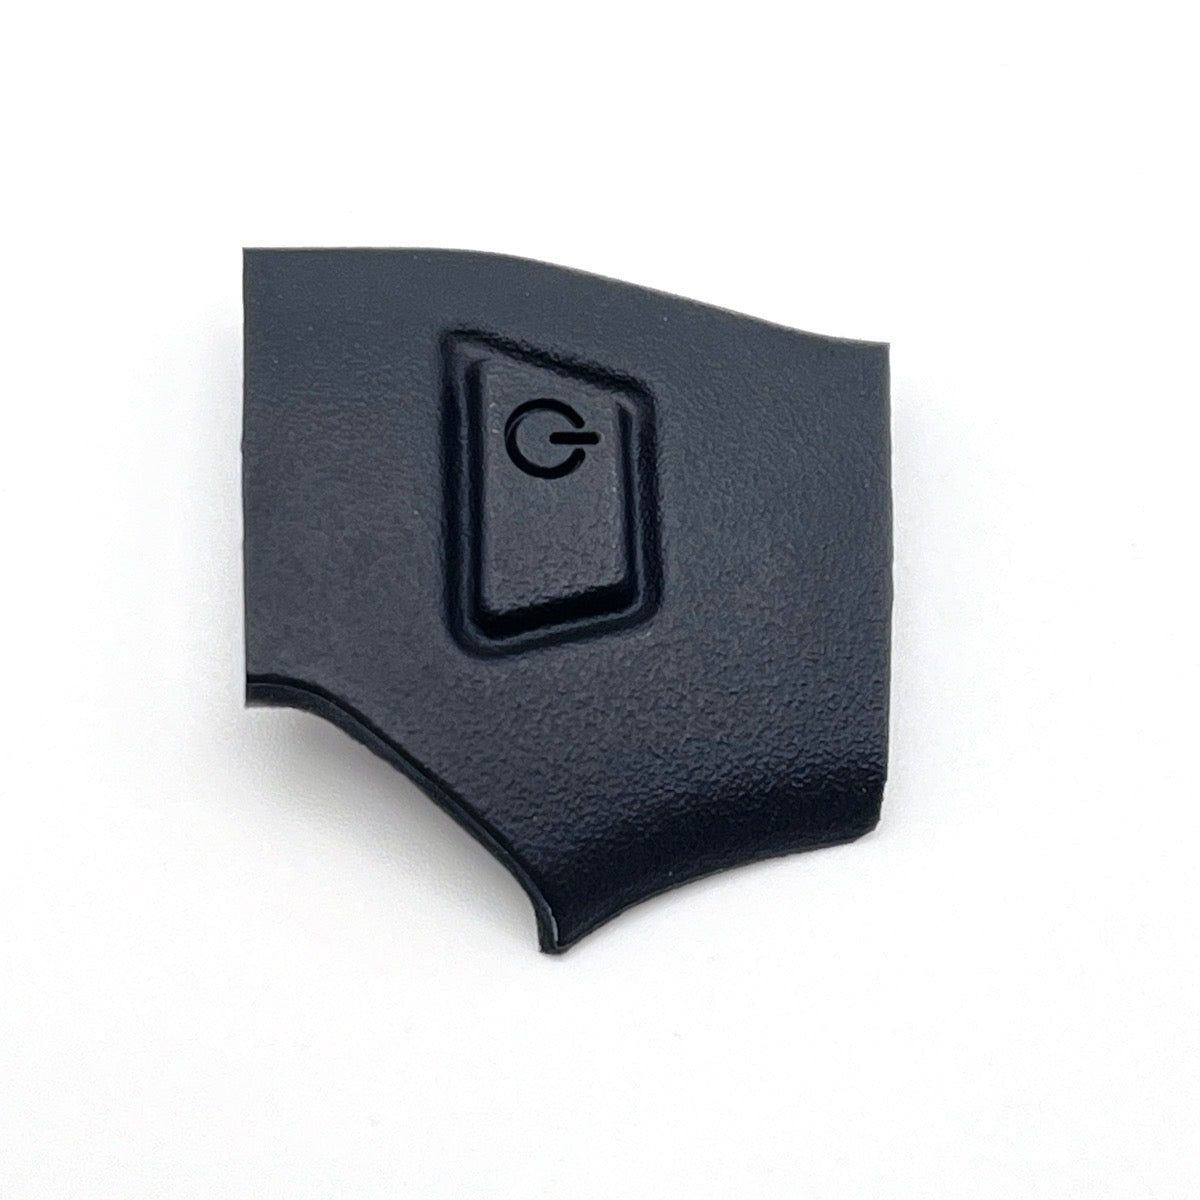 Replacement rubber power button for Garmin Montana 6xx (600, 650, 610, 680)